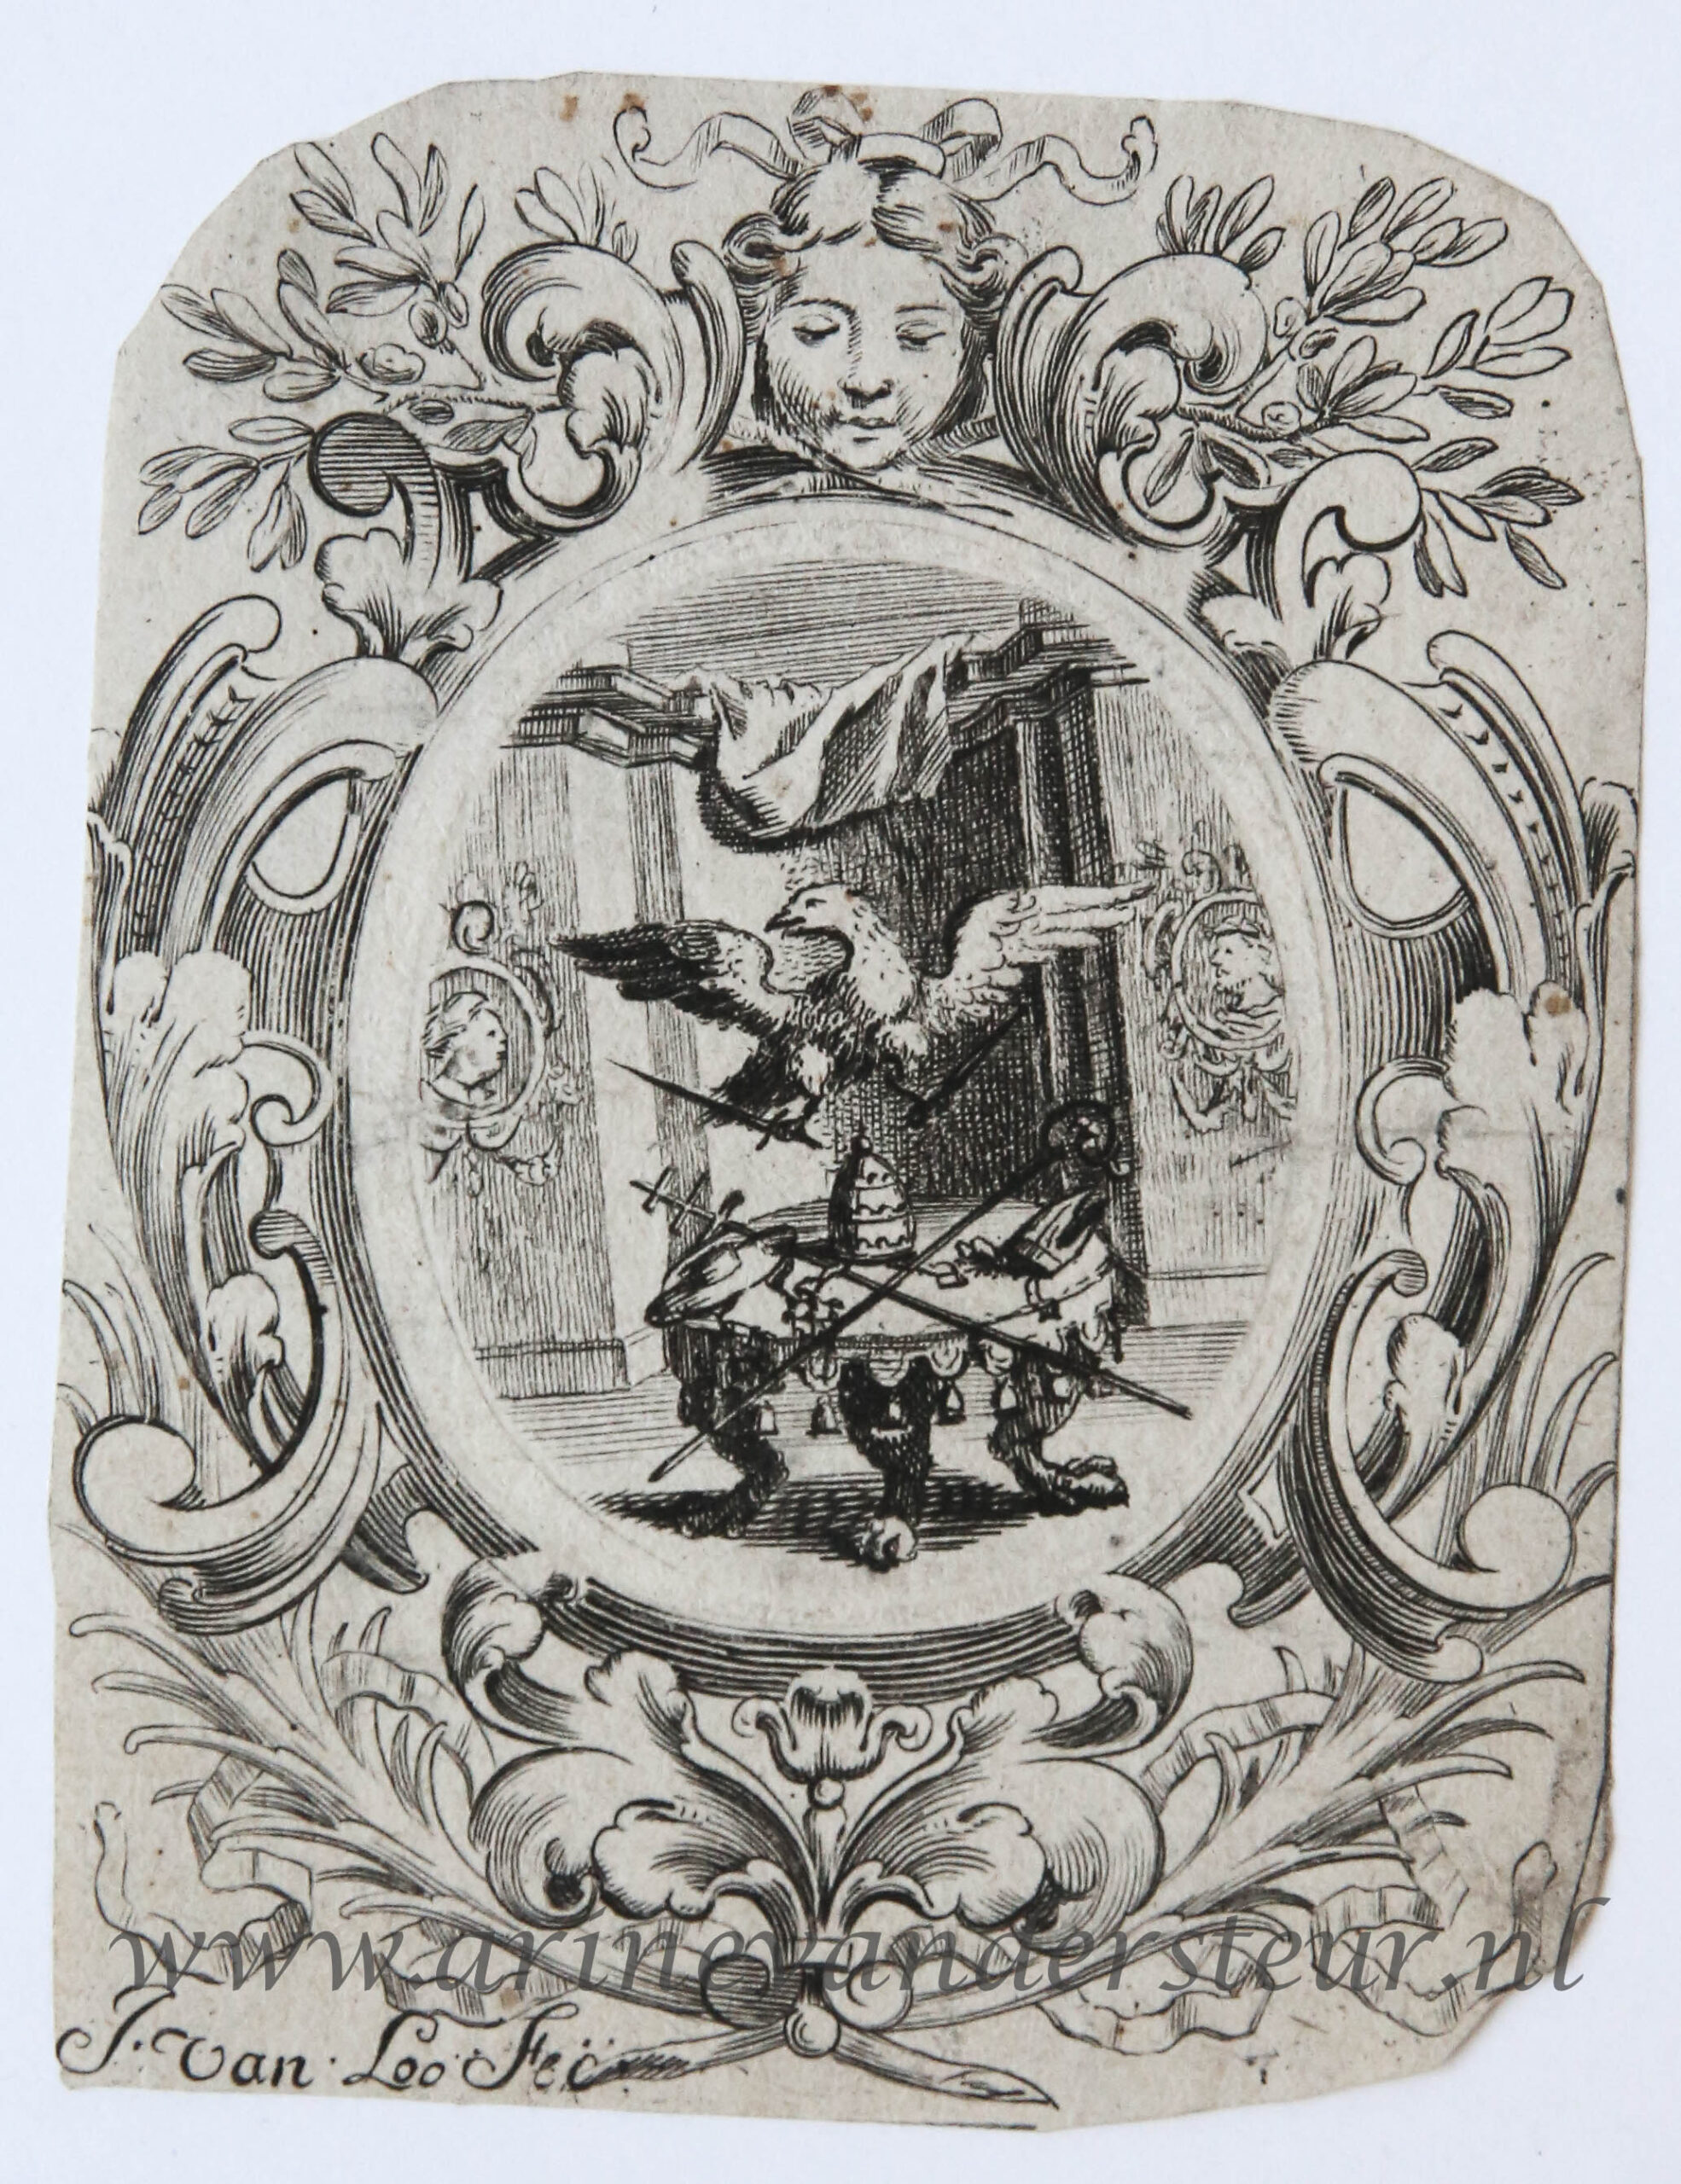 [Original etchings] Ornament prints/Decoratieve ornament prenten met vogels etc., ca 1600-1650.